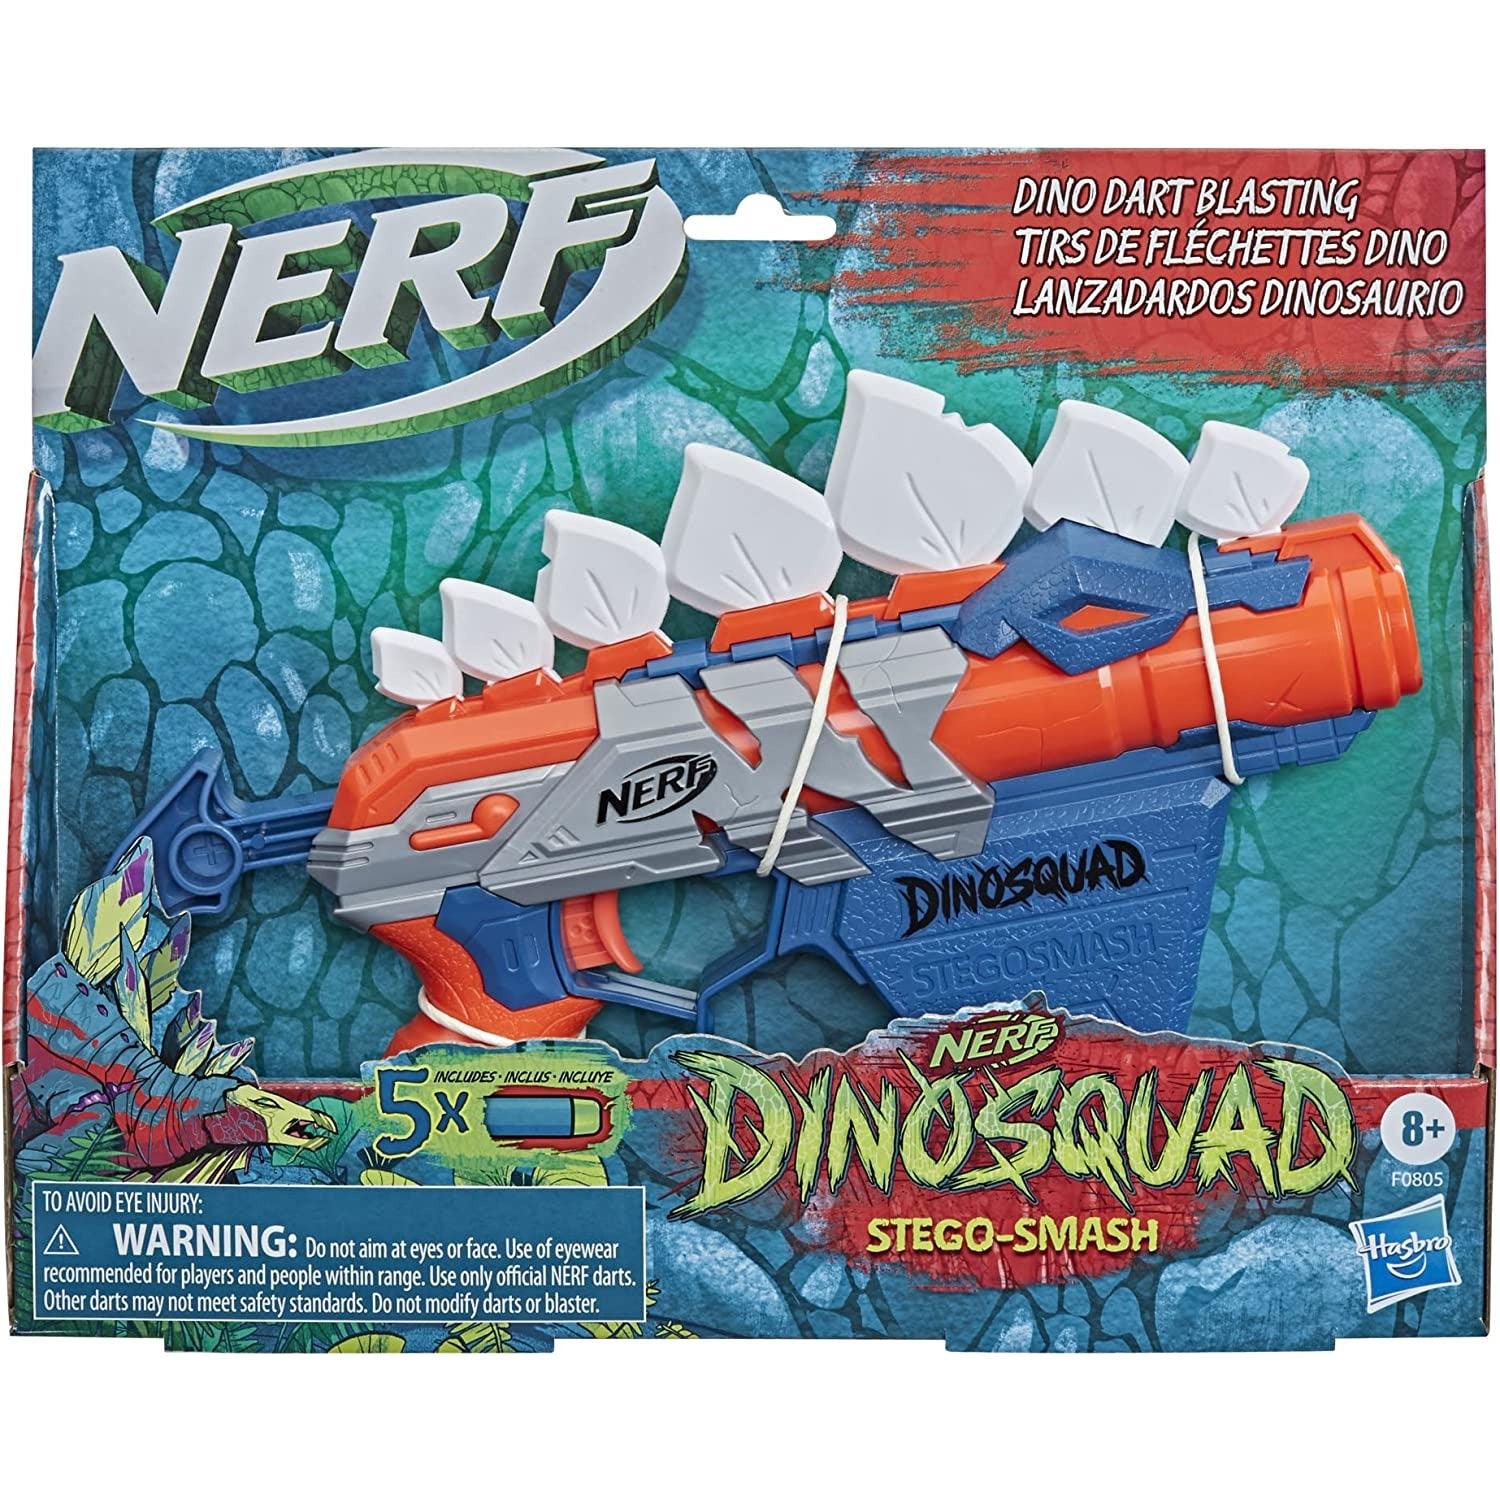 Nerf DinoSquad Stego-Smash Dart Blaster, 5 Nerf Elite Darts, Kids Outdoor Toys, Dinosaur Toys for 8 Year Old Boys and Girls and Up, Stegosaurus Dinosaur Design - BumbleToys - 6+ Years, Blasters, Blasters & Water Pistols, Boys, Fortnite, Guns, Pre-Order